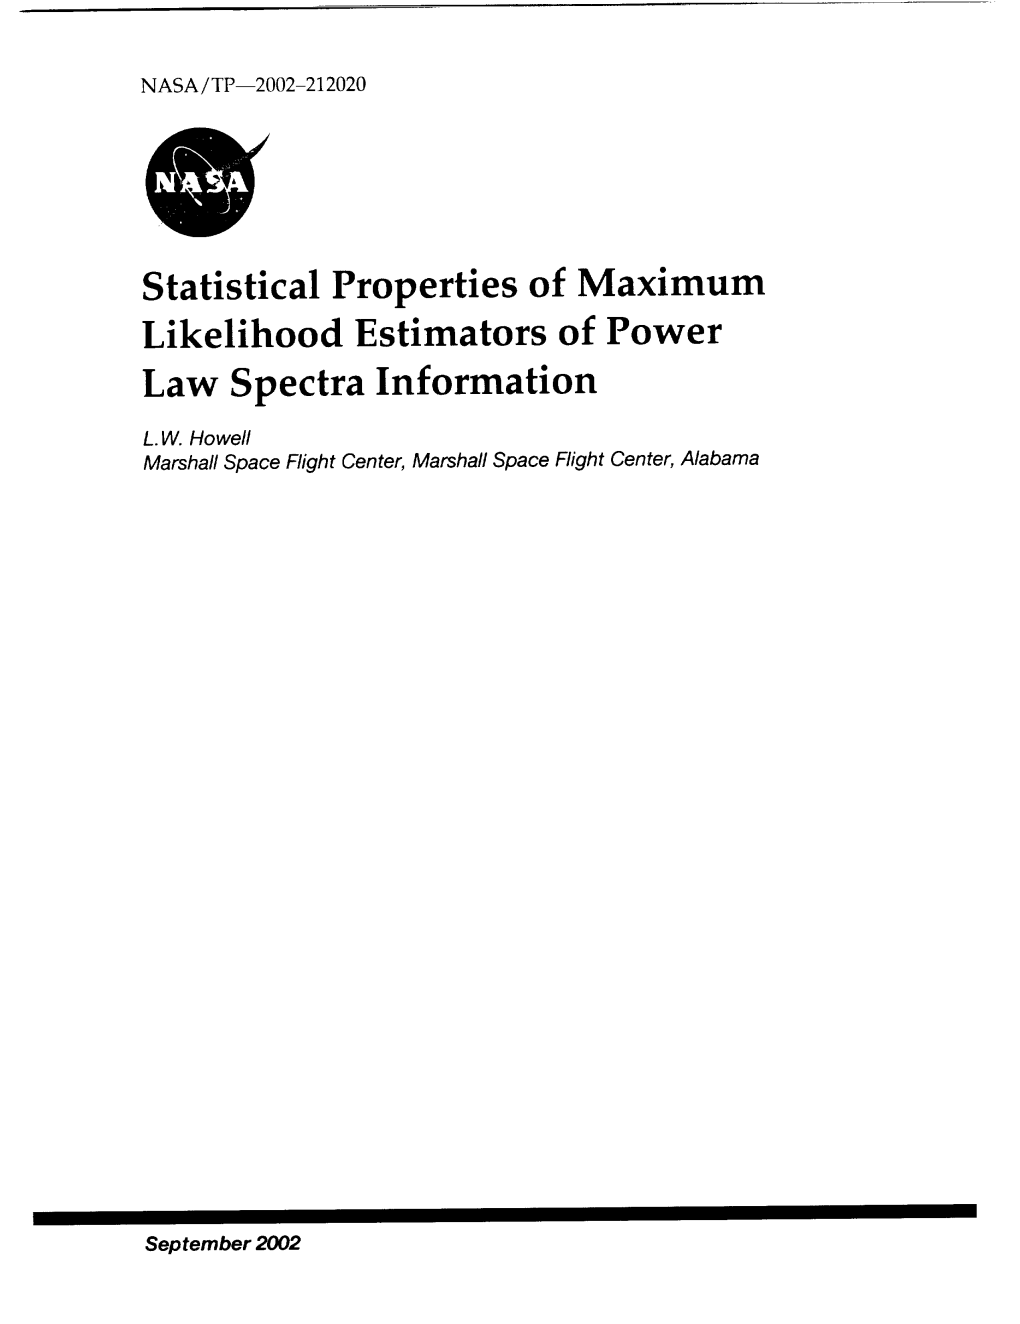 Statistical Properties of Maximum Likelihood Estimators of Power Law Spectra Information